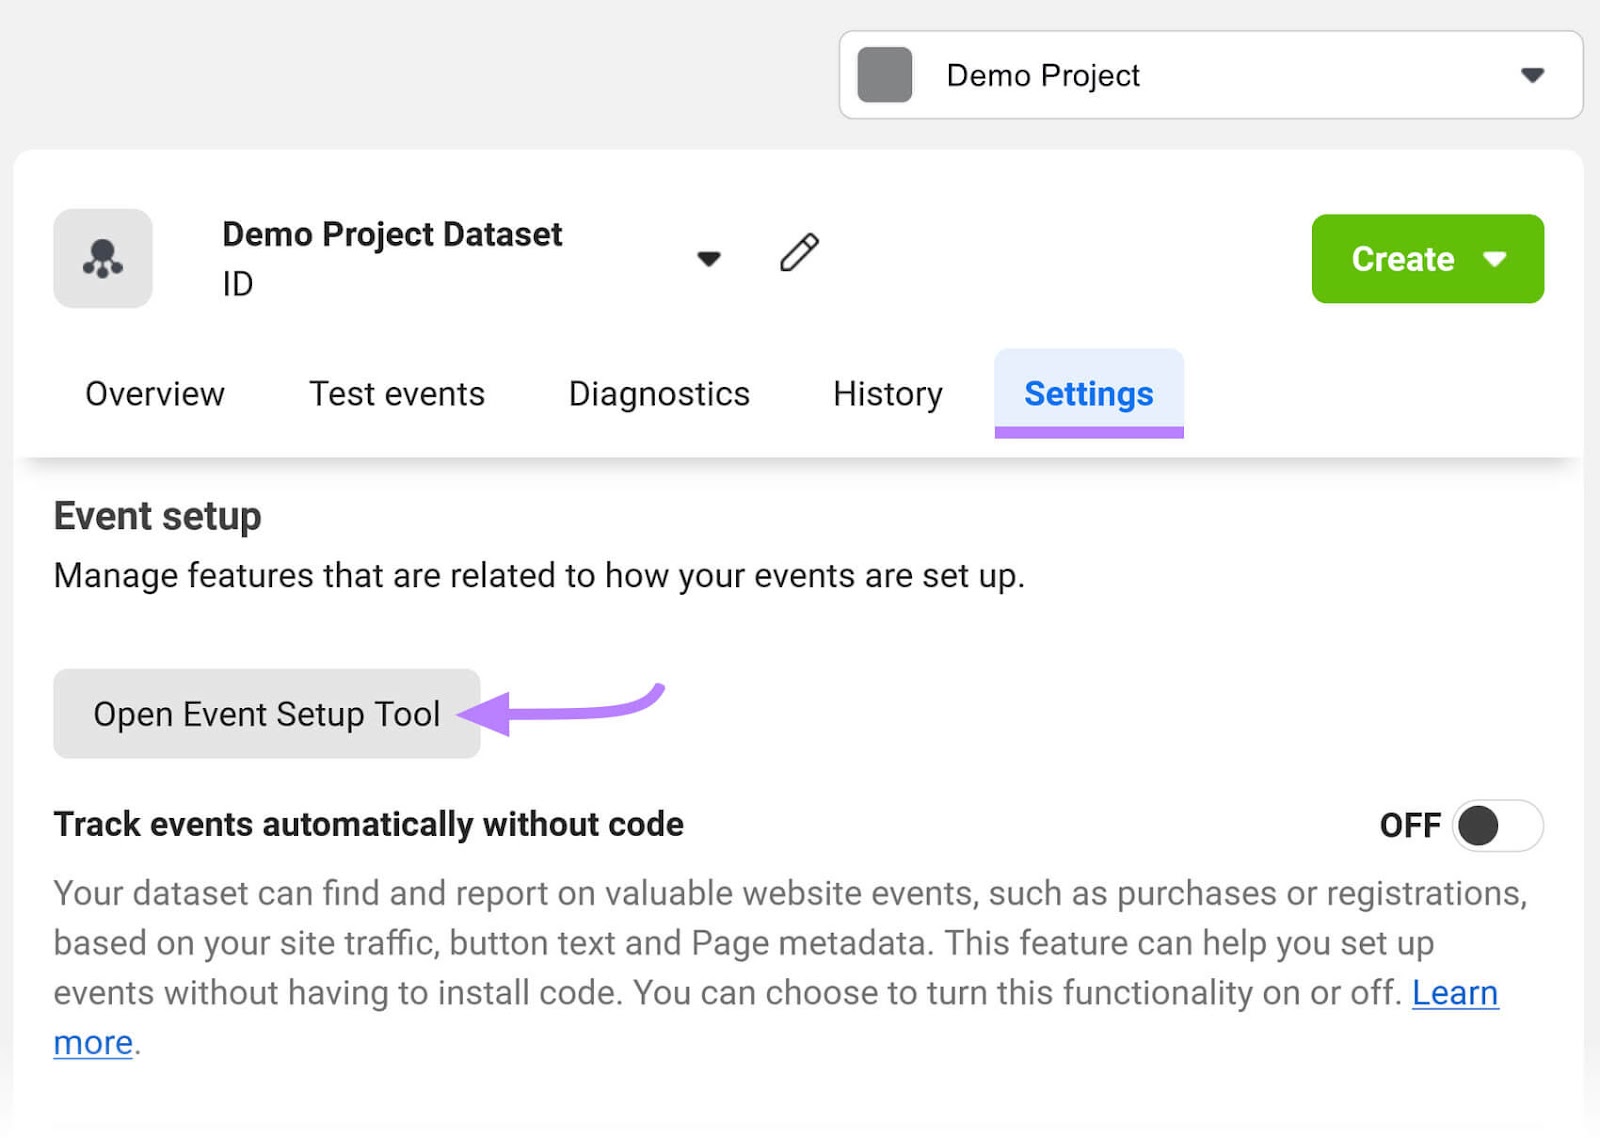 “Open Event Setup Tool” button selected under "Event setup" module